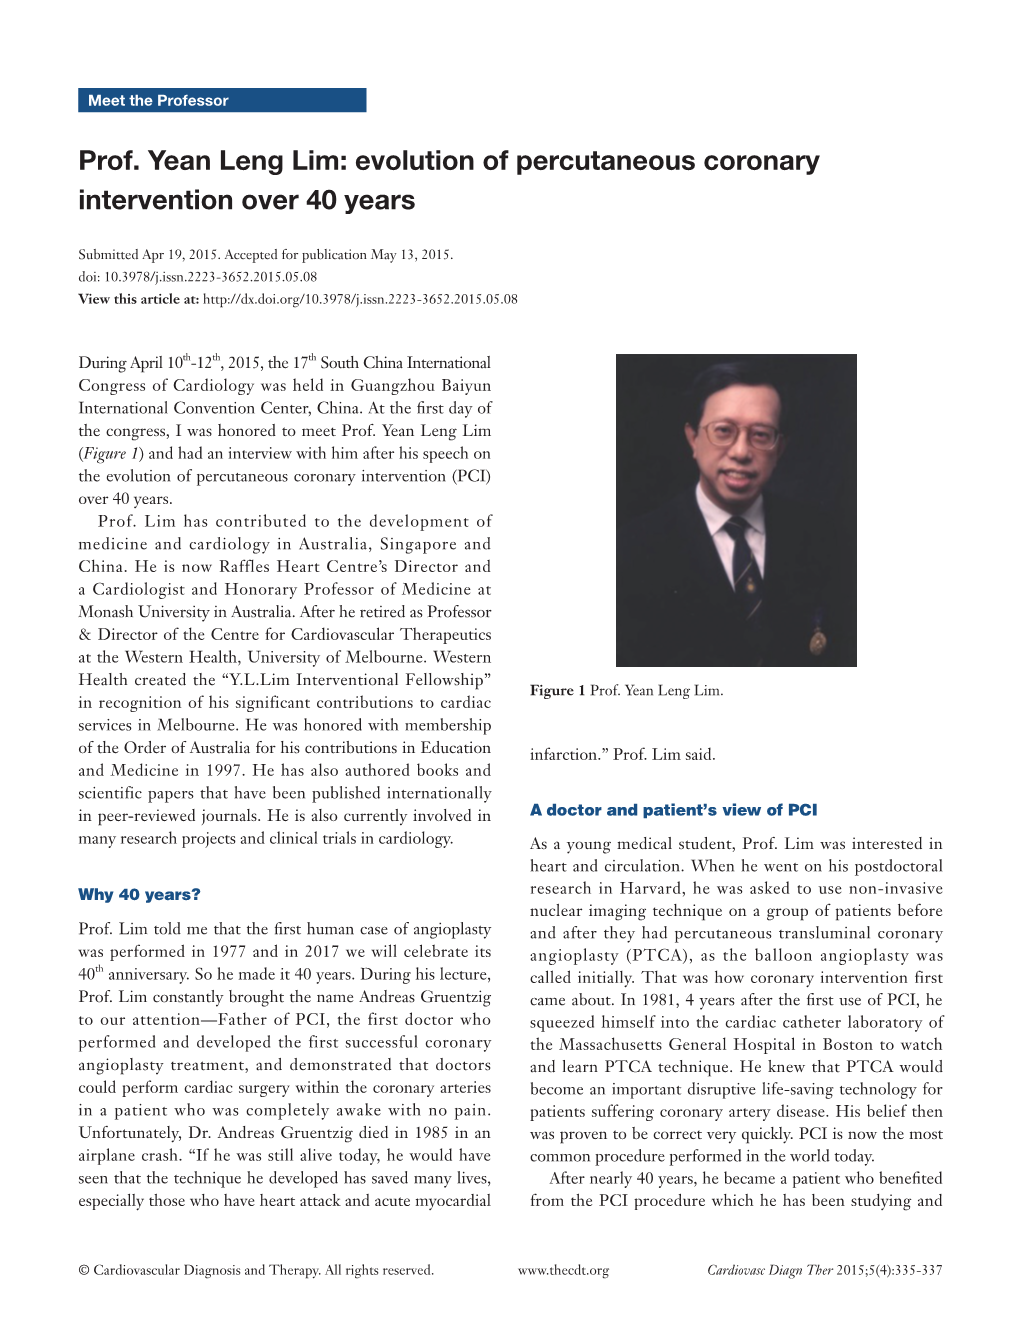 Prof. Yean Leng Lim: Evolution of Percutaneous Coronary Intervention Over 40 Years